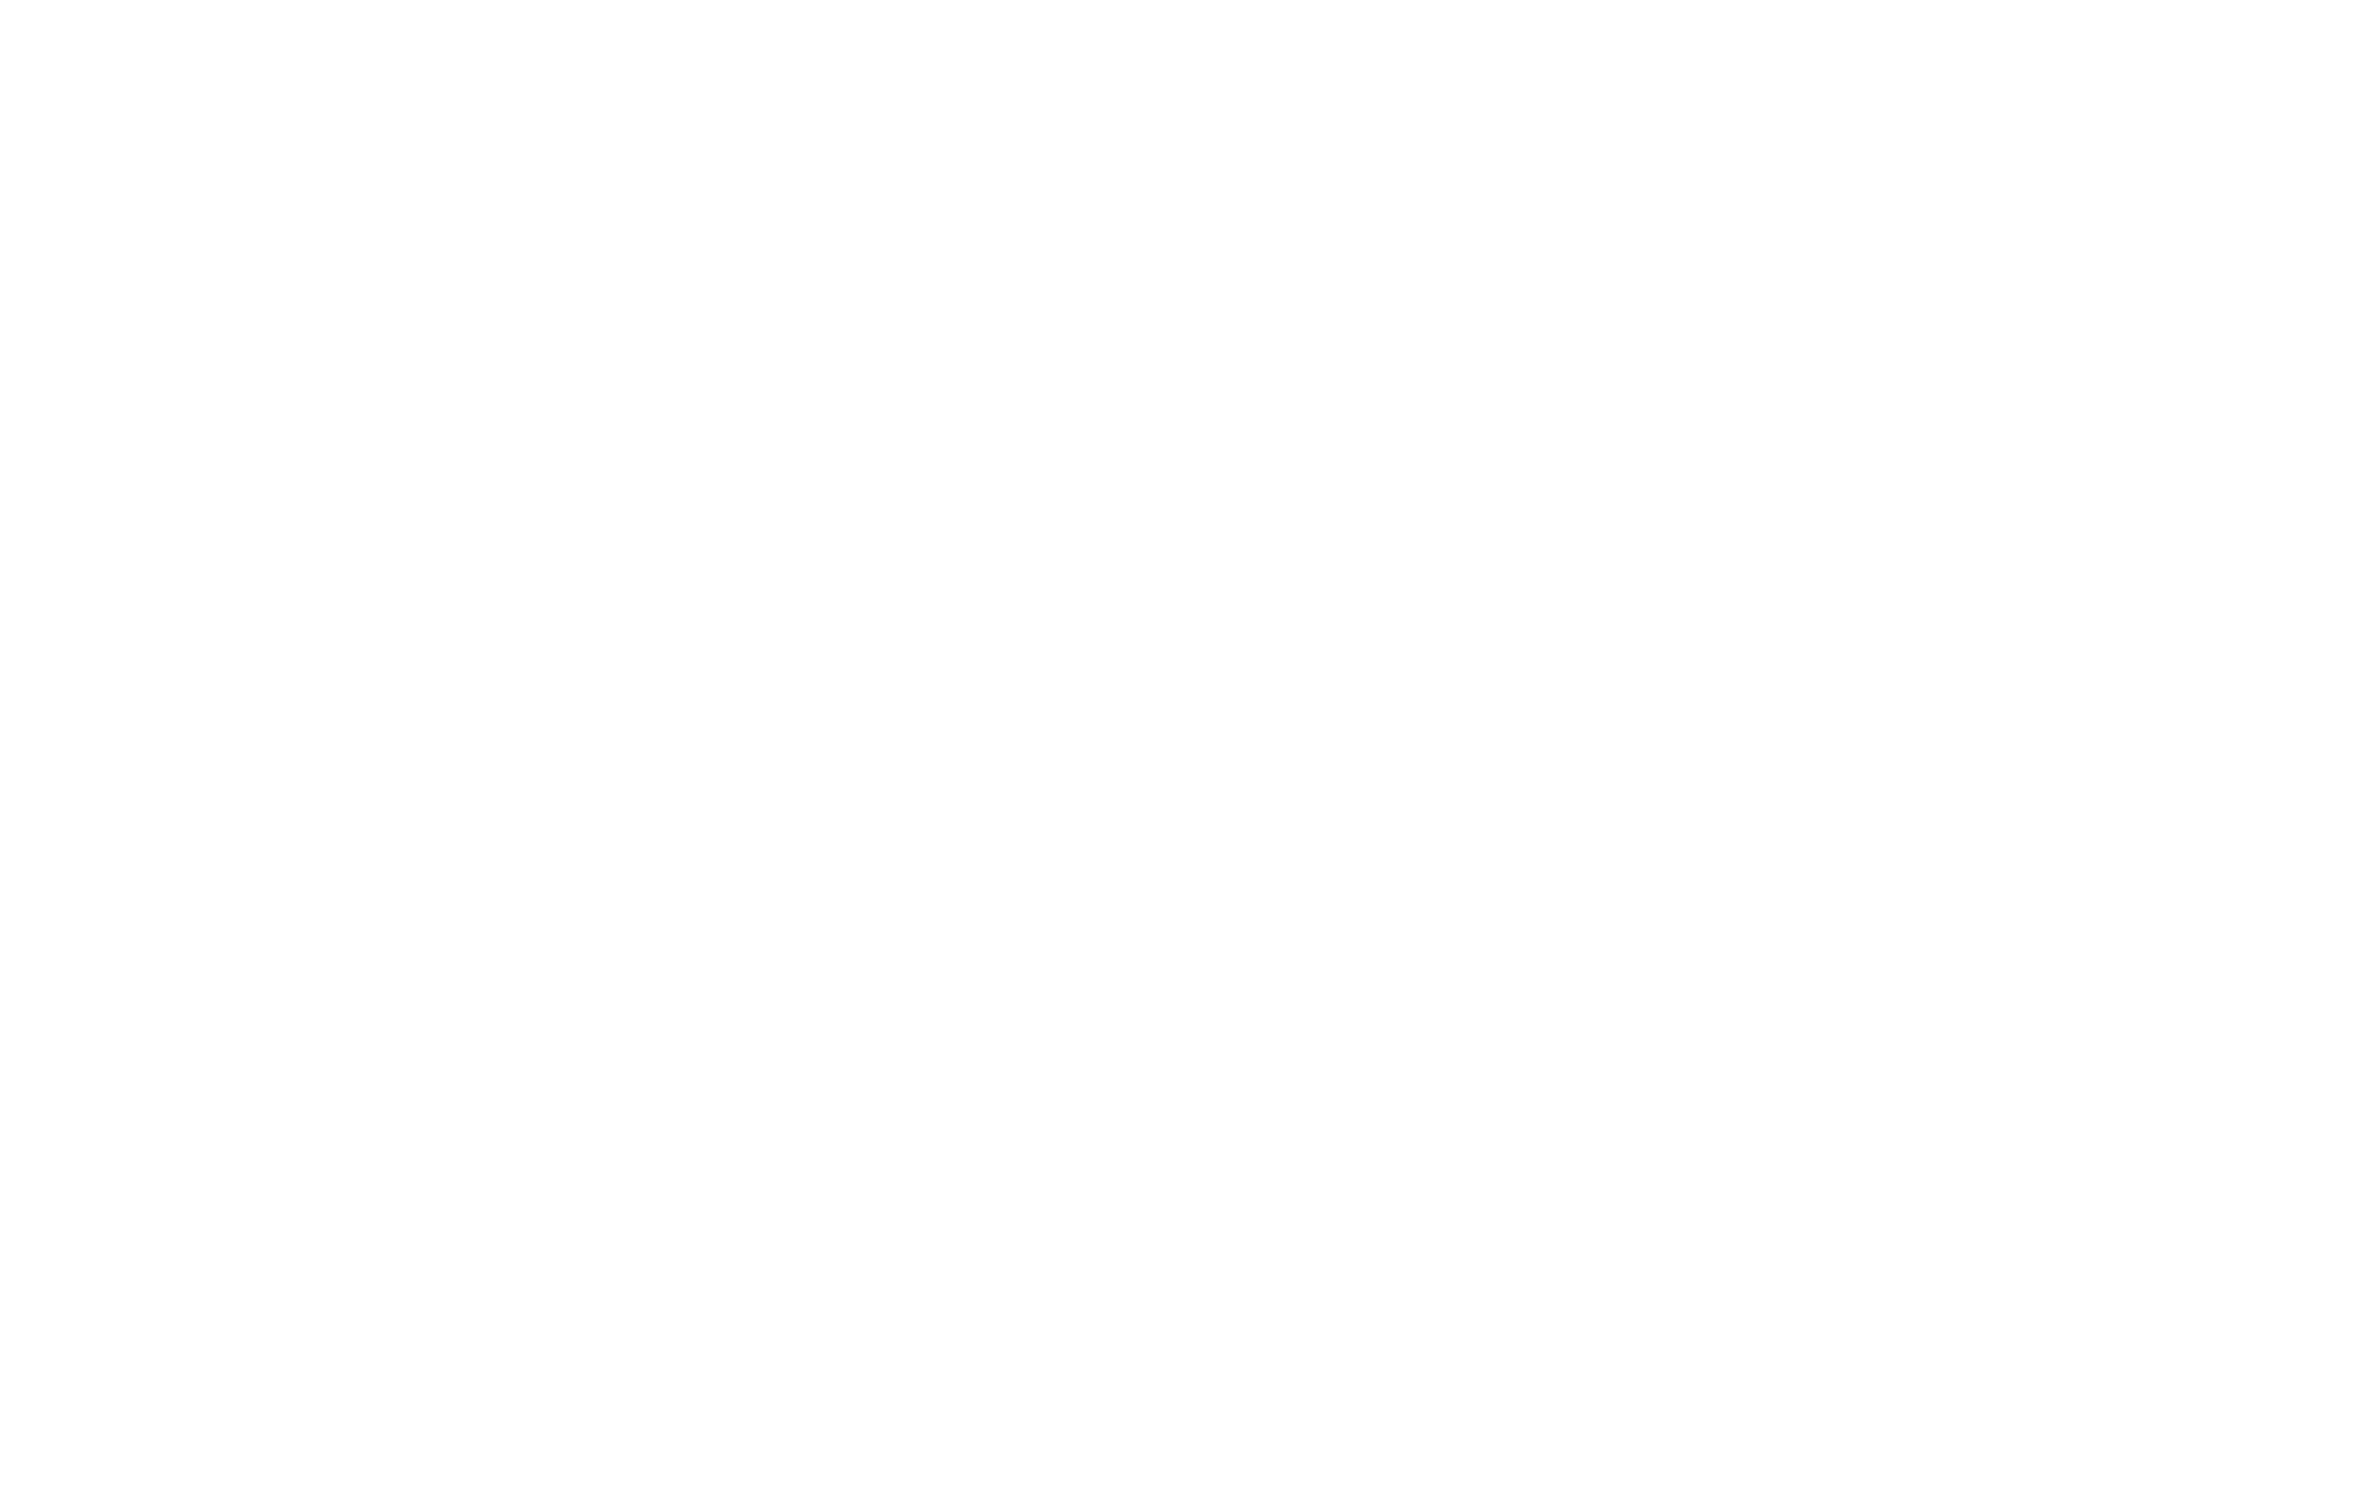 Valente Italian Properties